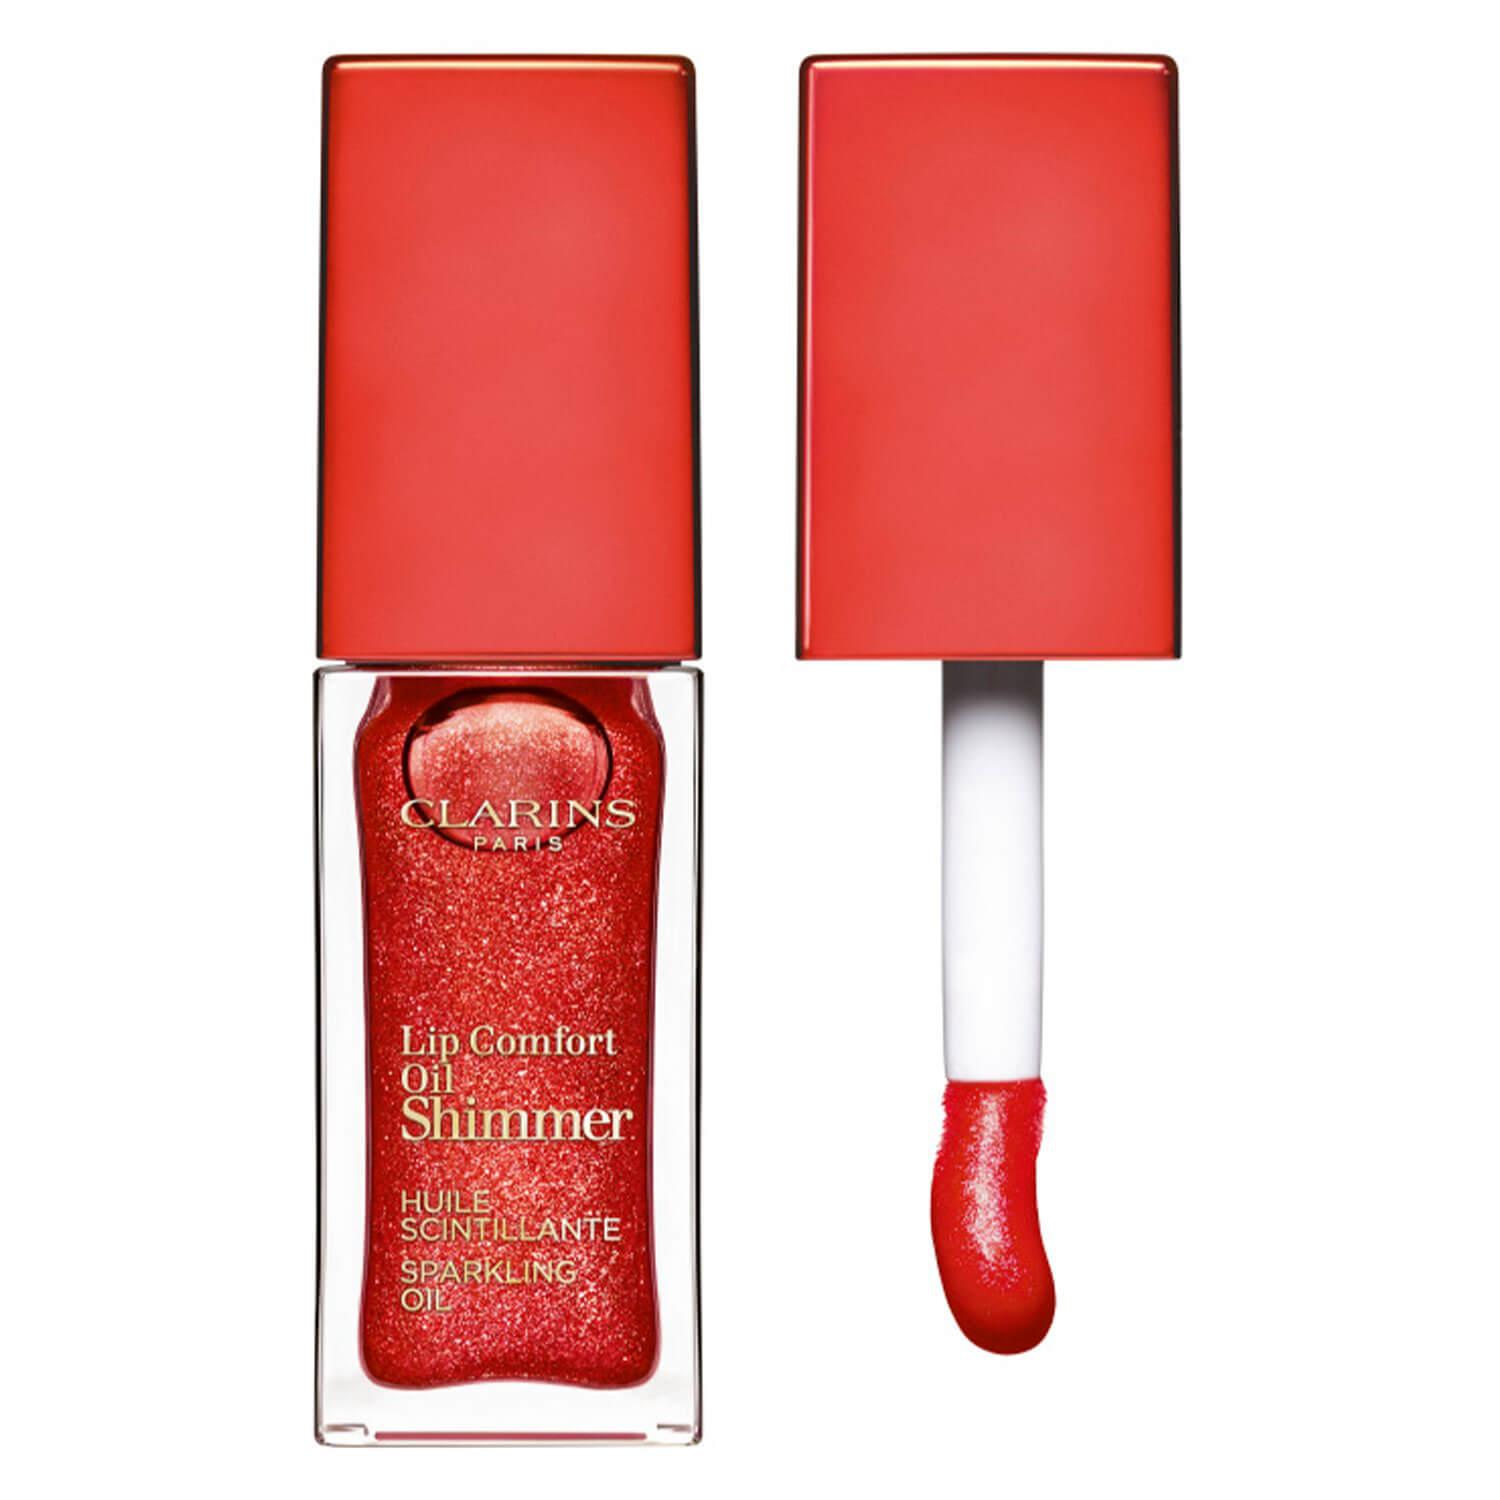 Lip Comfort Oil - Shimmer Red Hot 07